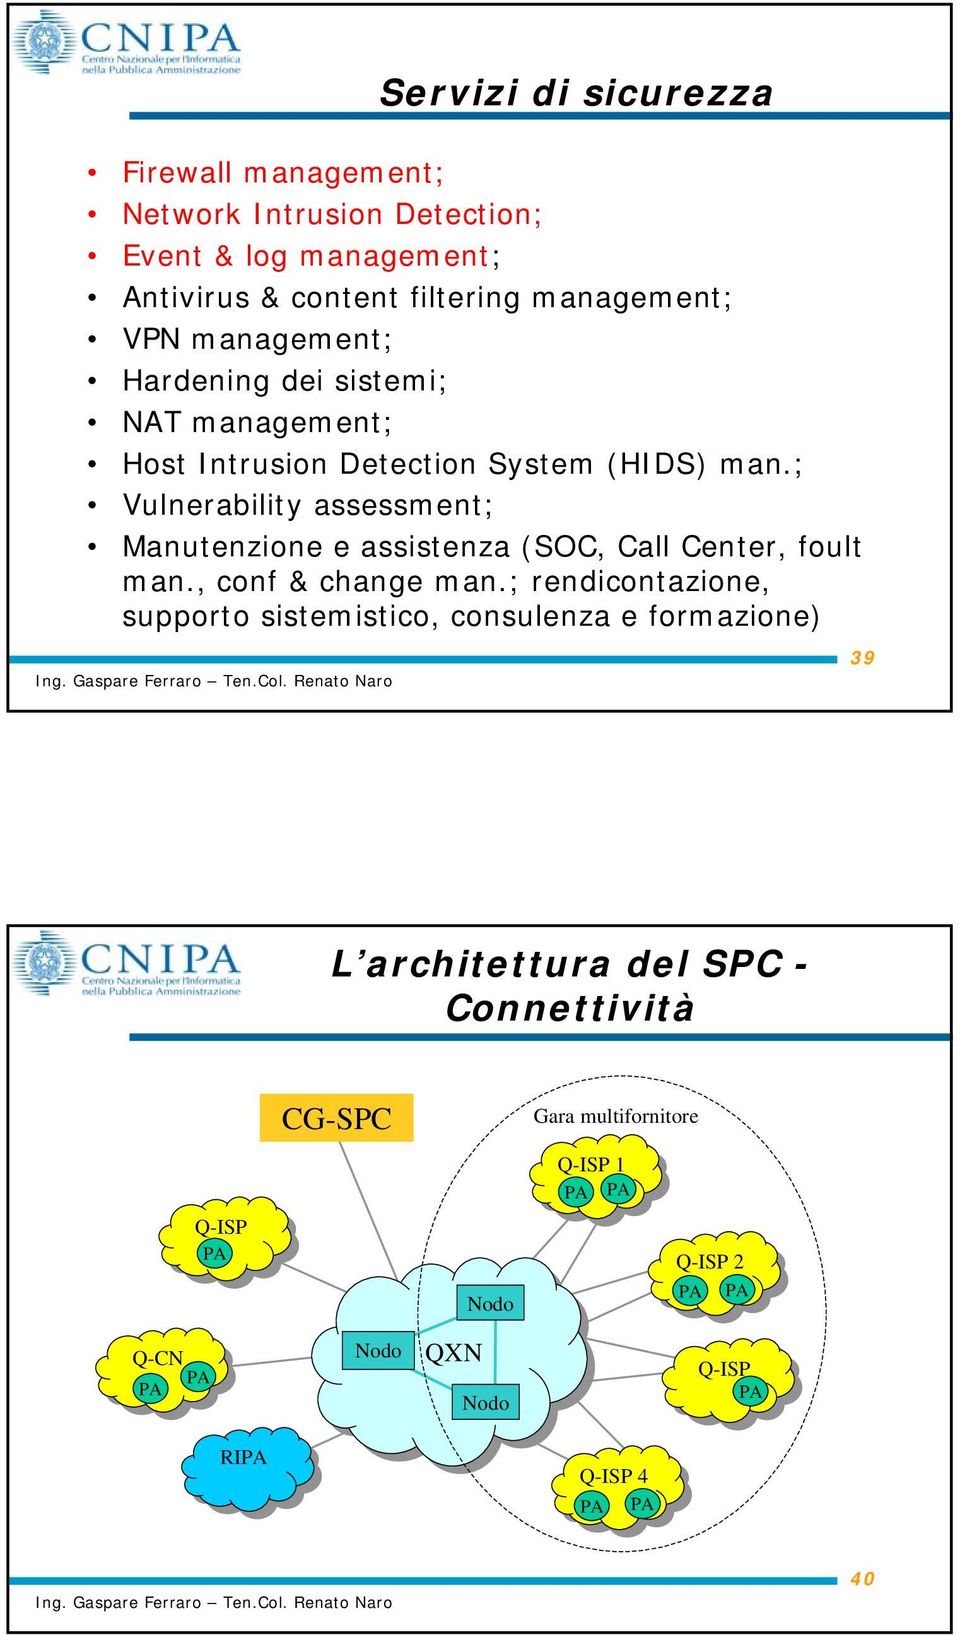 ; Vulnerability assessment; Manutenzione e assistenza (SOC, Call Center, foult man., conf & change man.